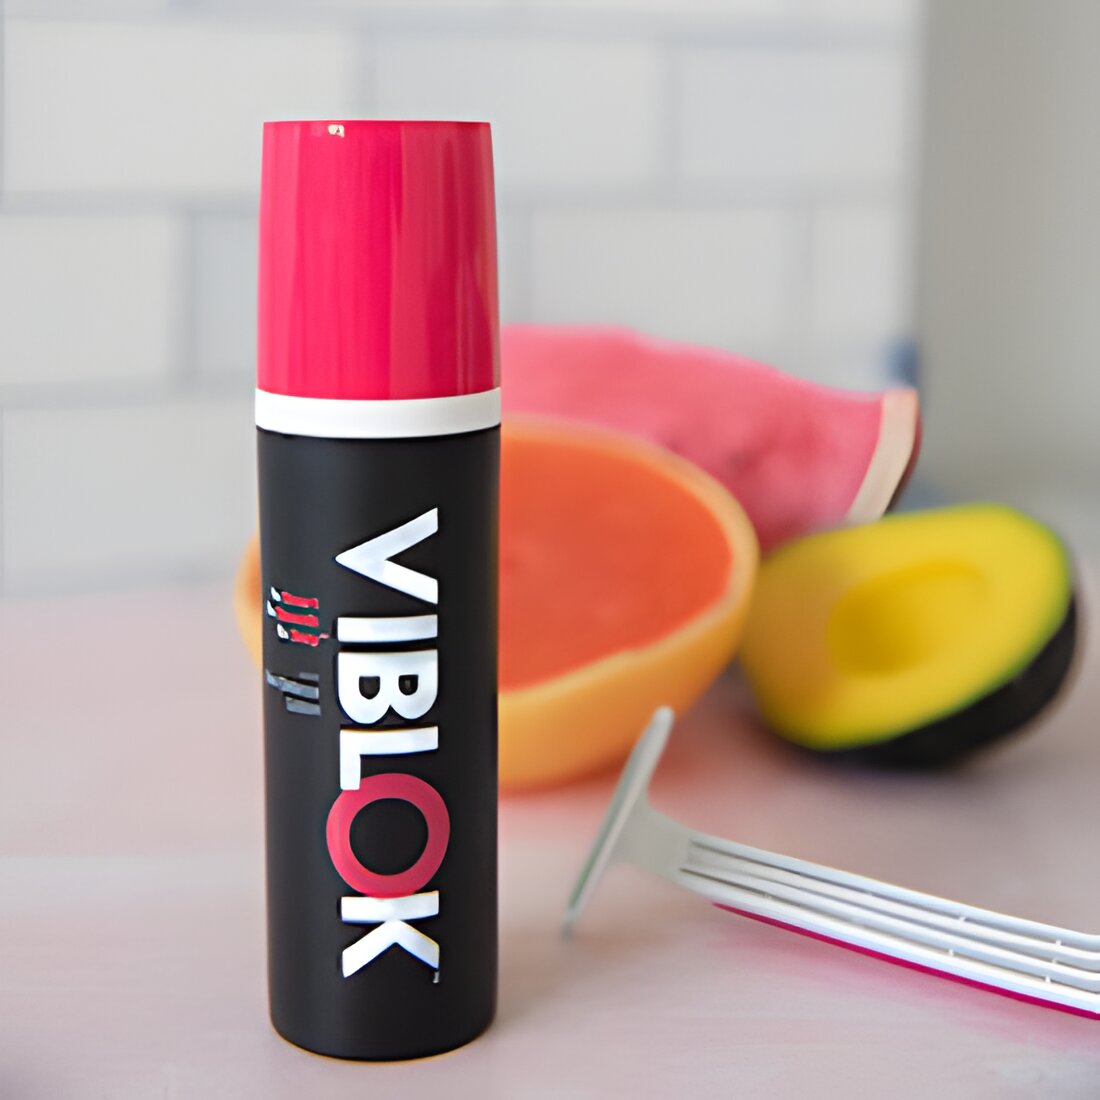 Free Sample Of ViblokÂ® Skin Defense Lotion